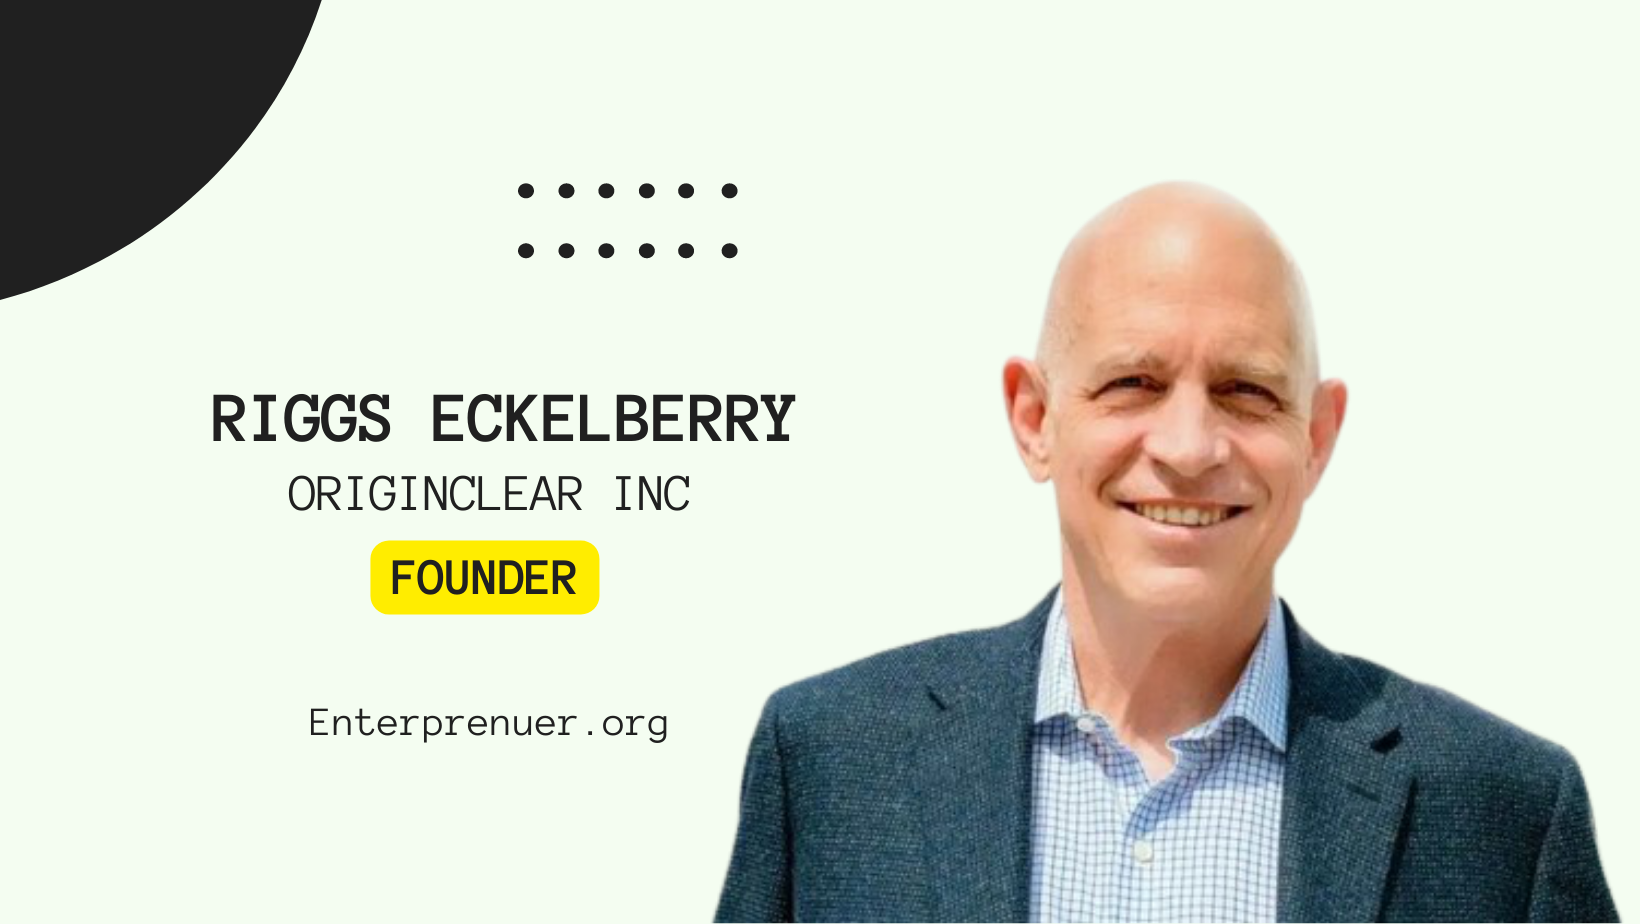 Riggs Eckelberry Founder of OriginClear Inc